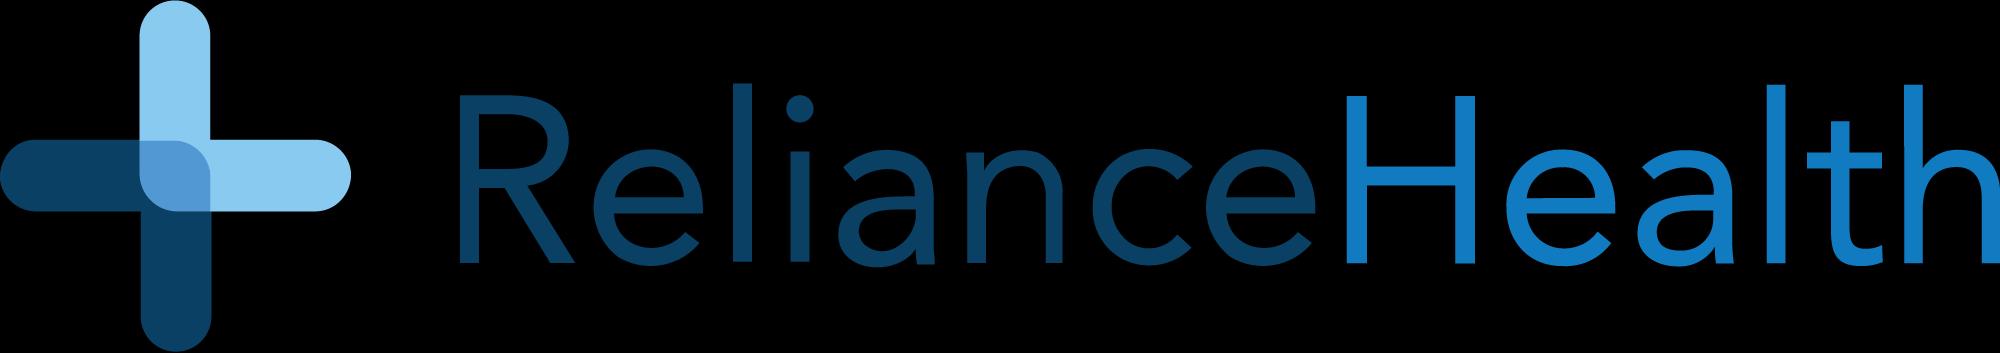 Reliance Health_logo